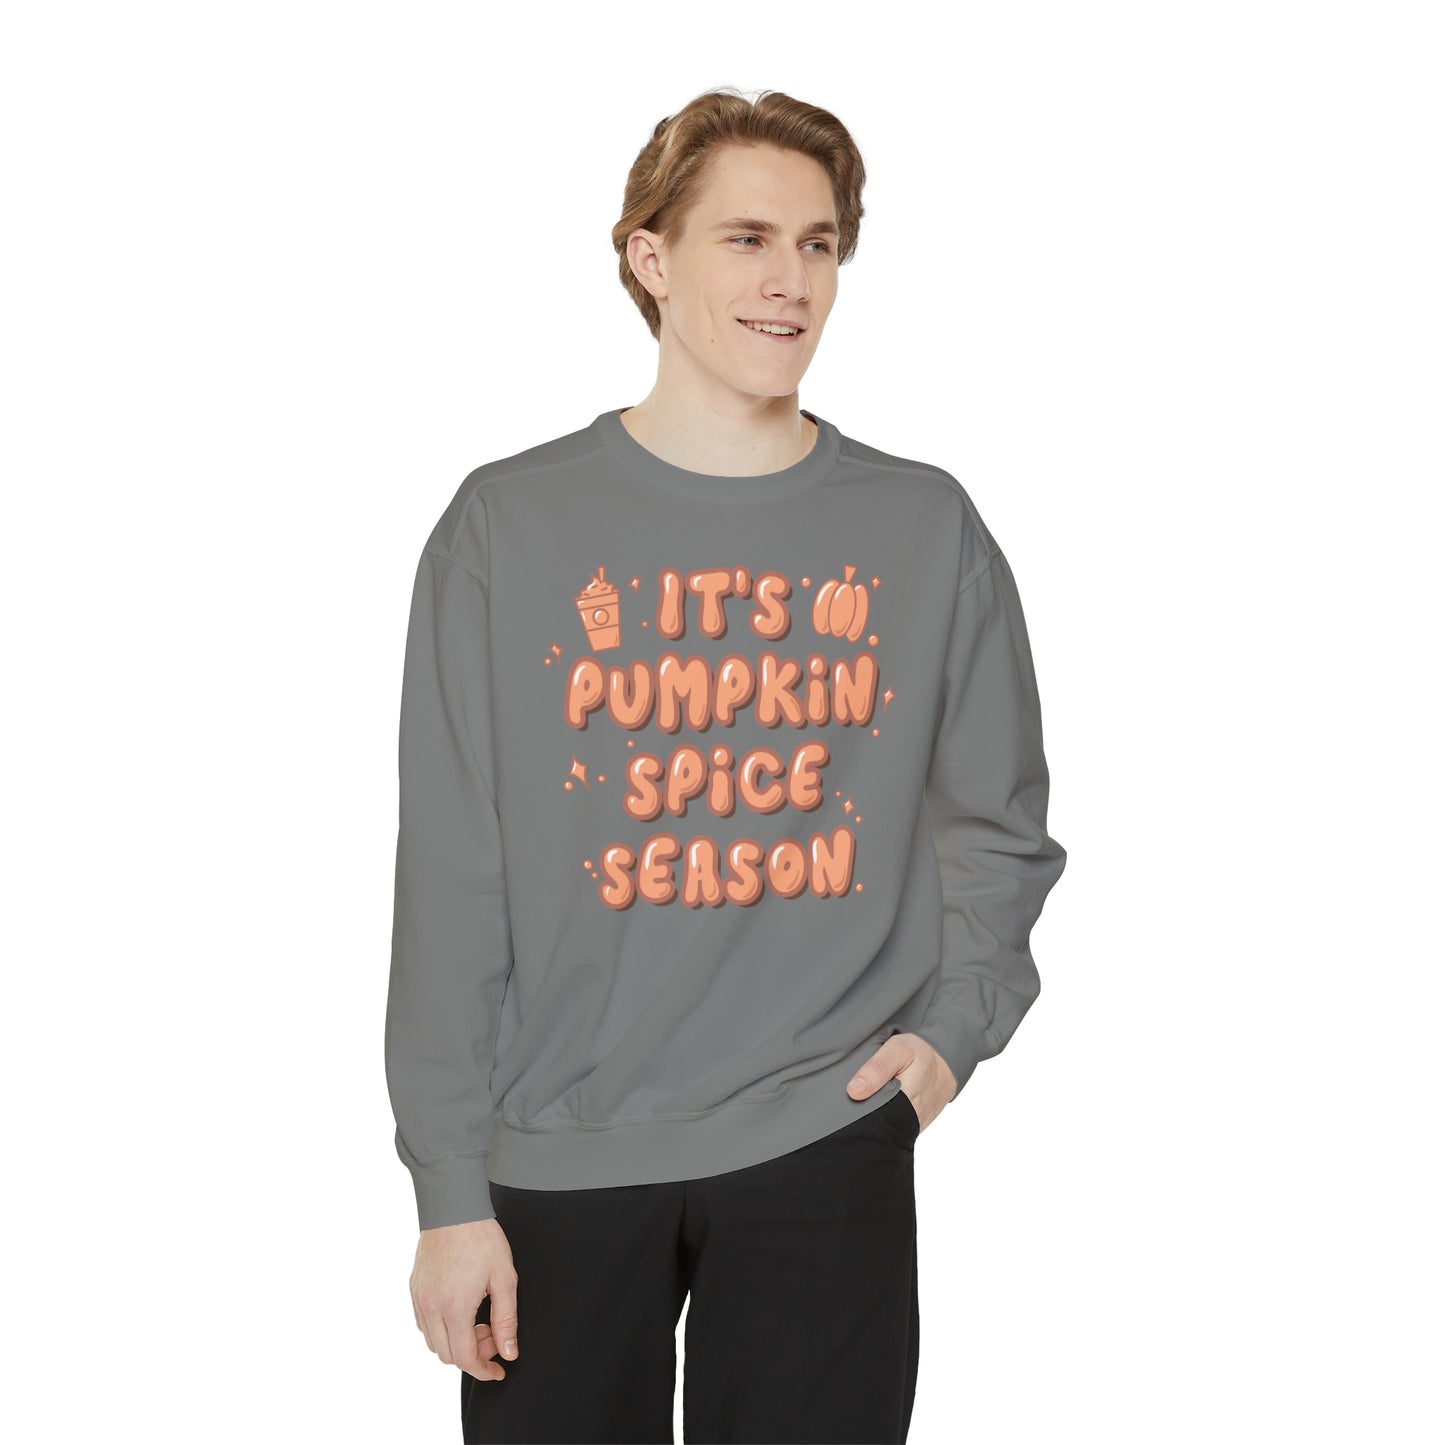 Adult Pumpkin Spice Season Tee - Comfort Colors Sweatshirt